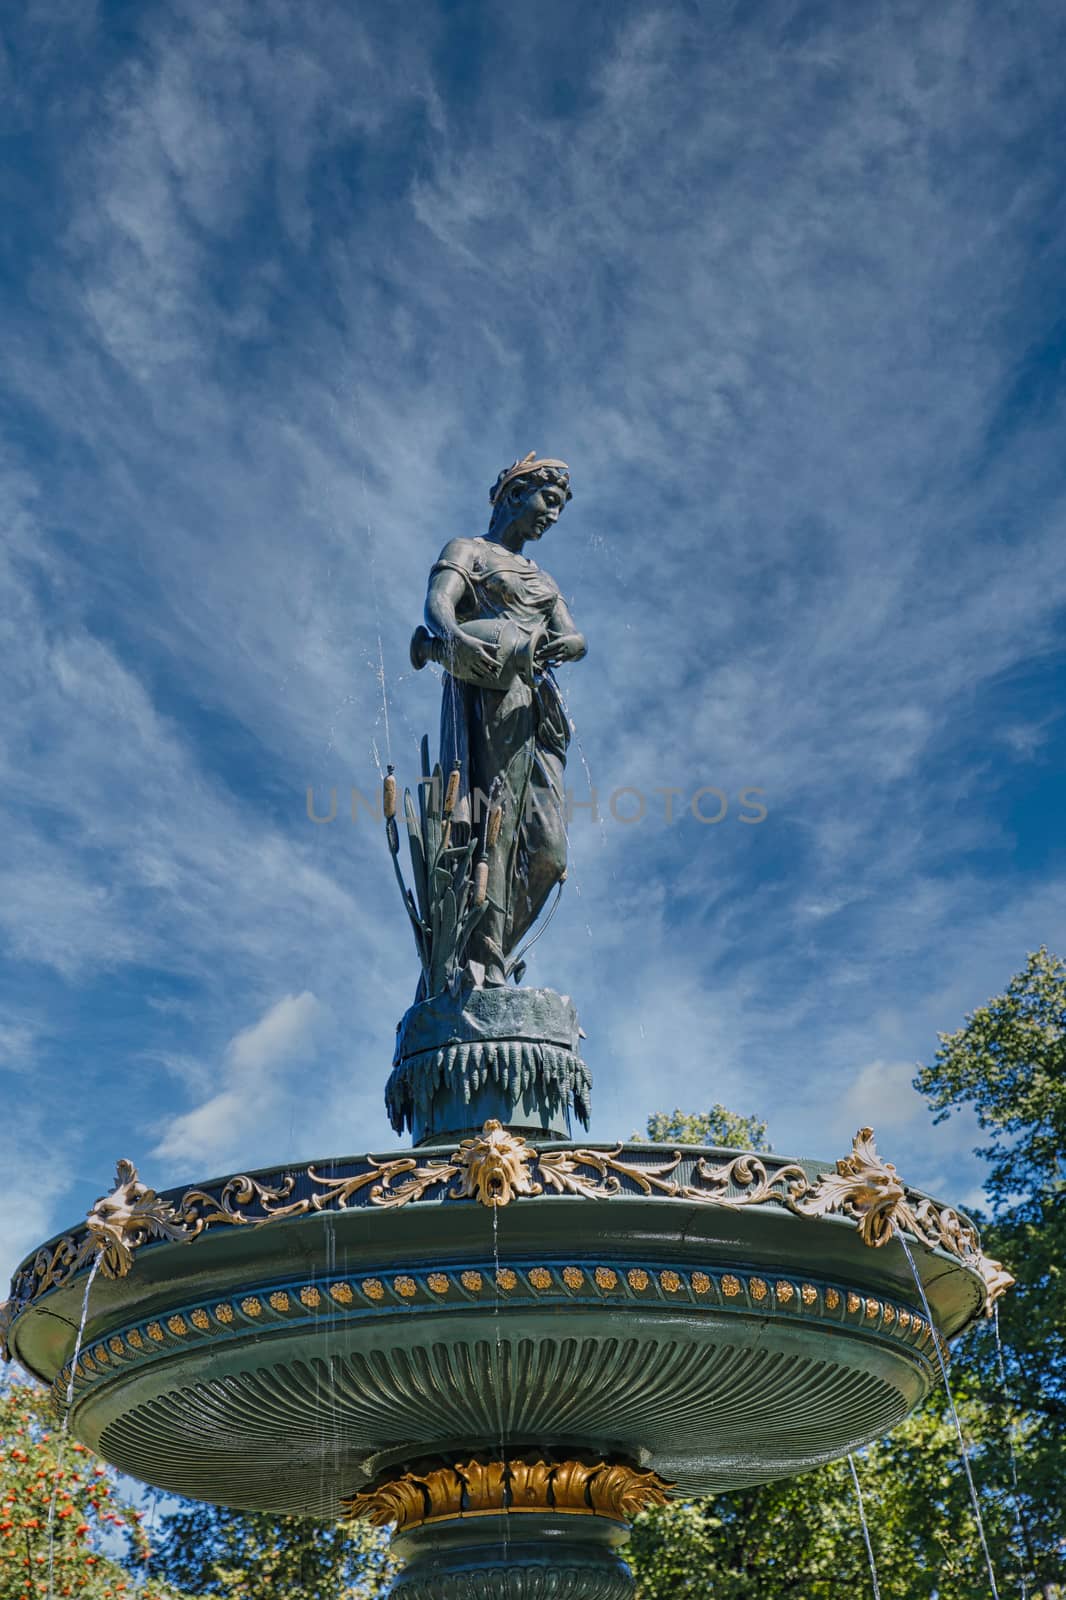 Statue on Fountain Under Blue sky by dbvirago